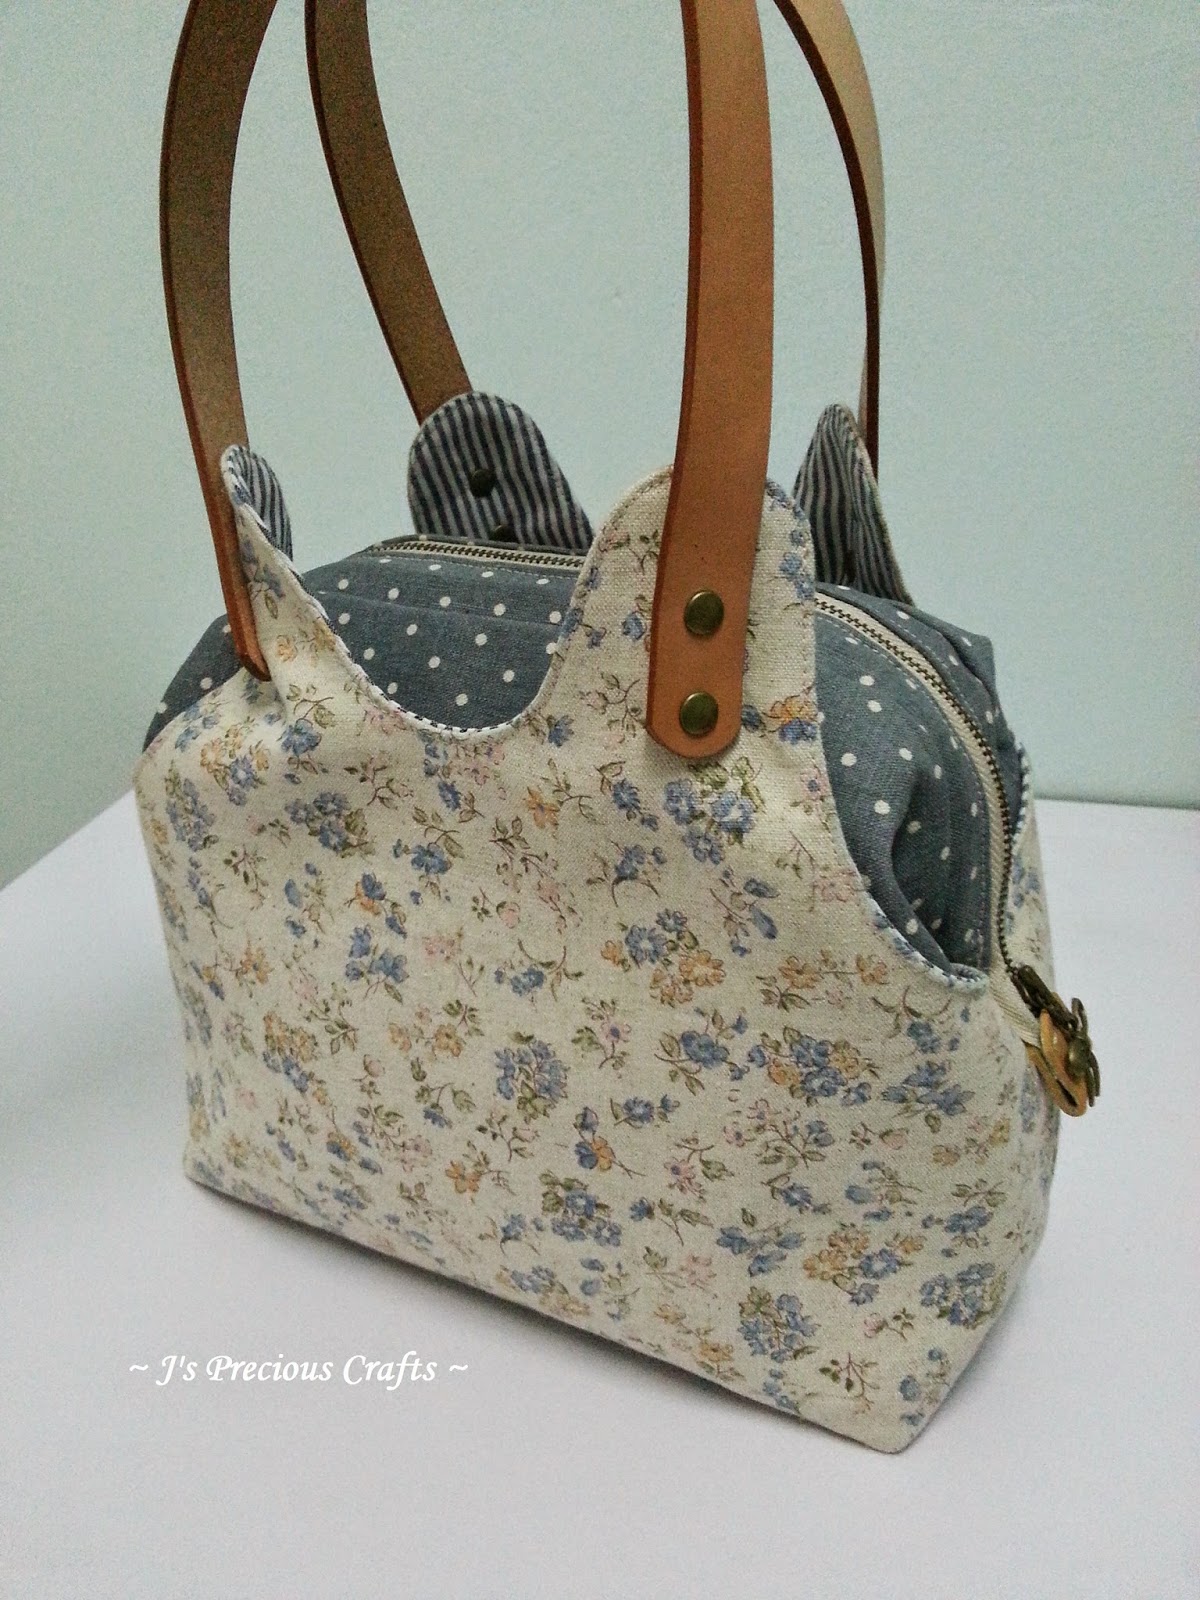 j's precious crafts: 小蓝花支架包 (客订) Little Blue Flower Frame Bag (Custom ...